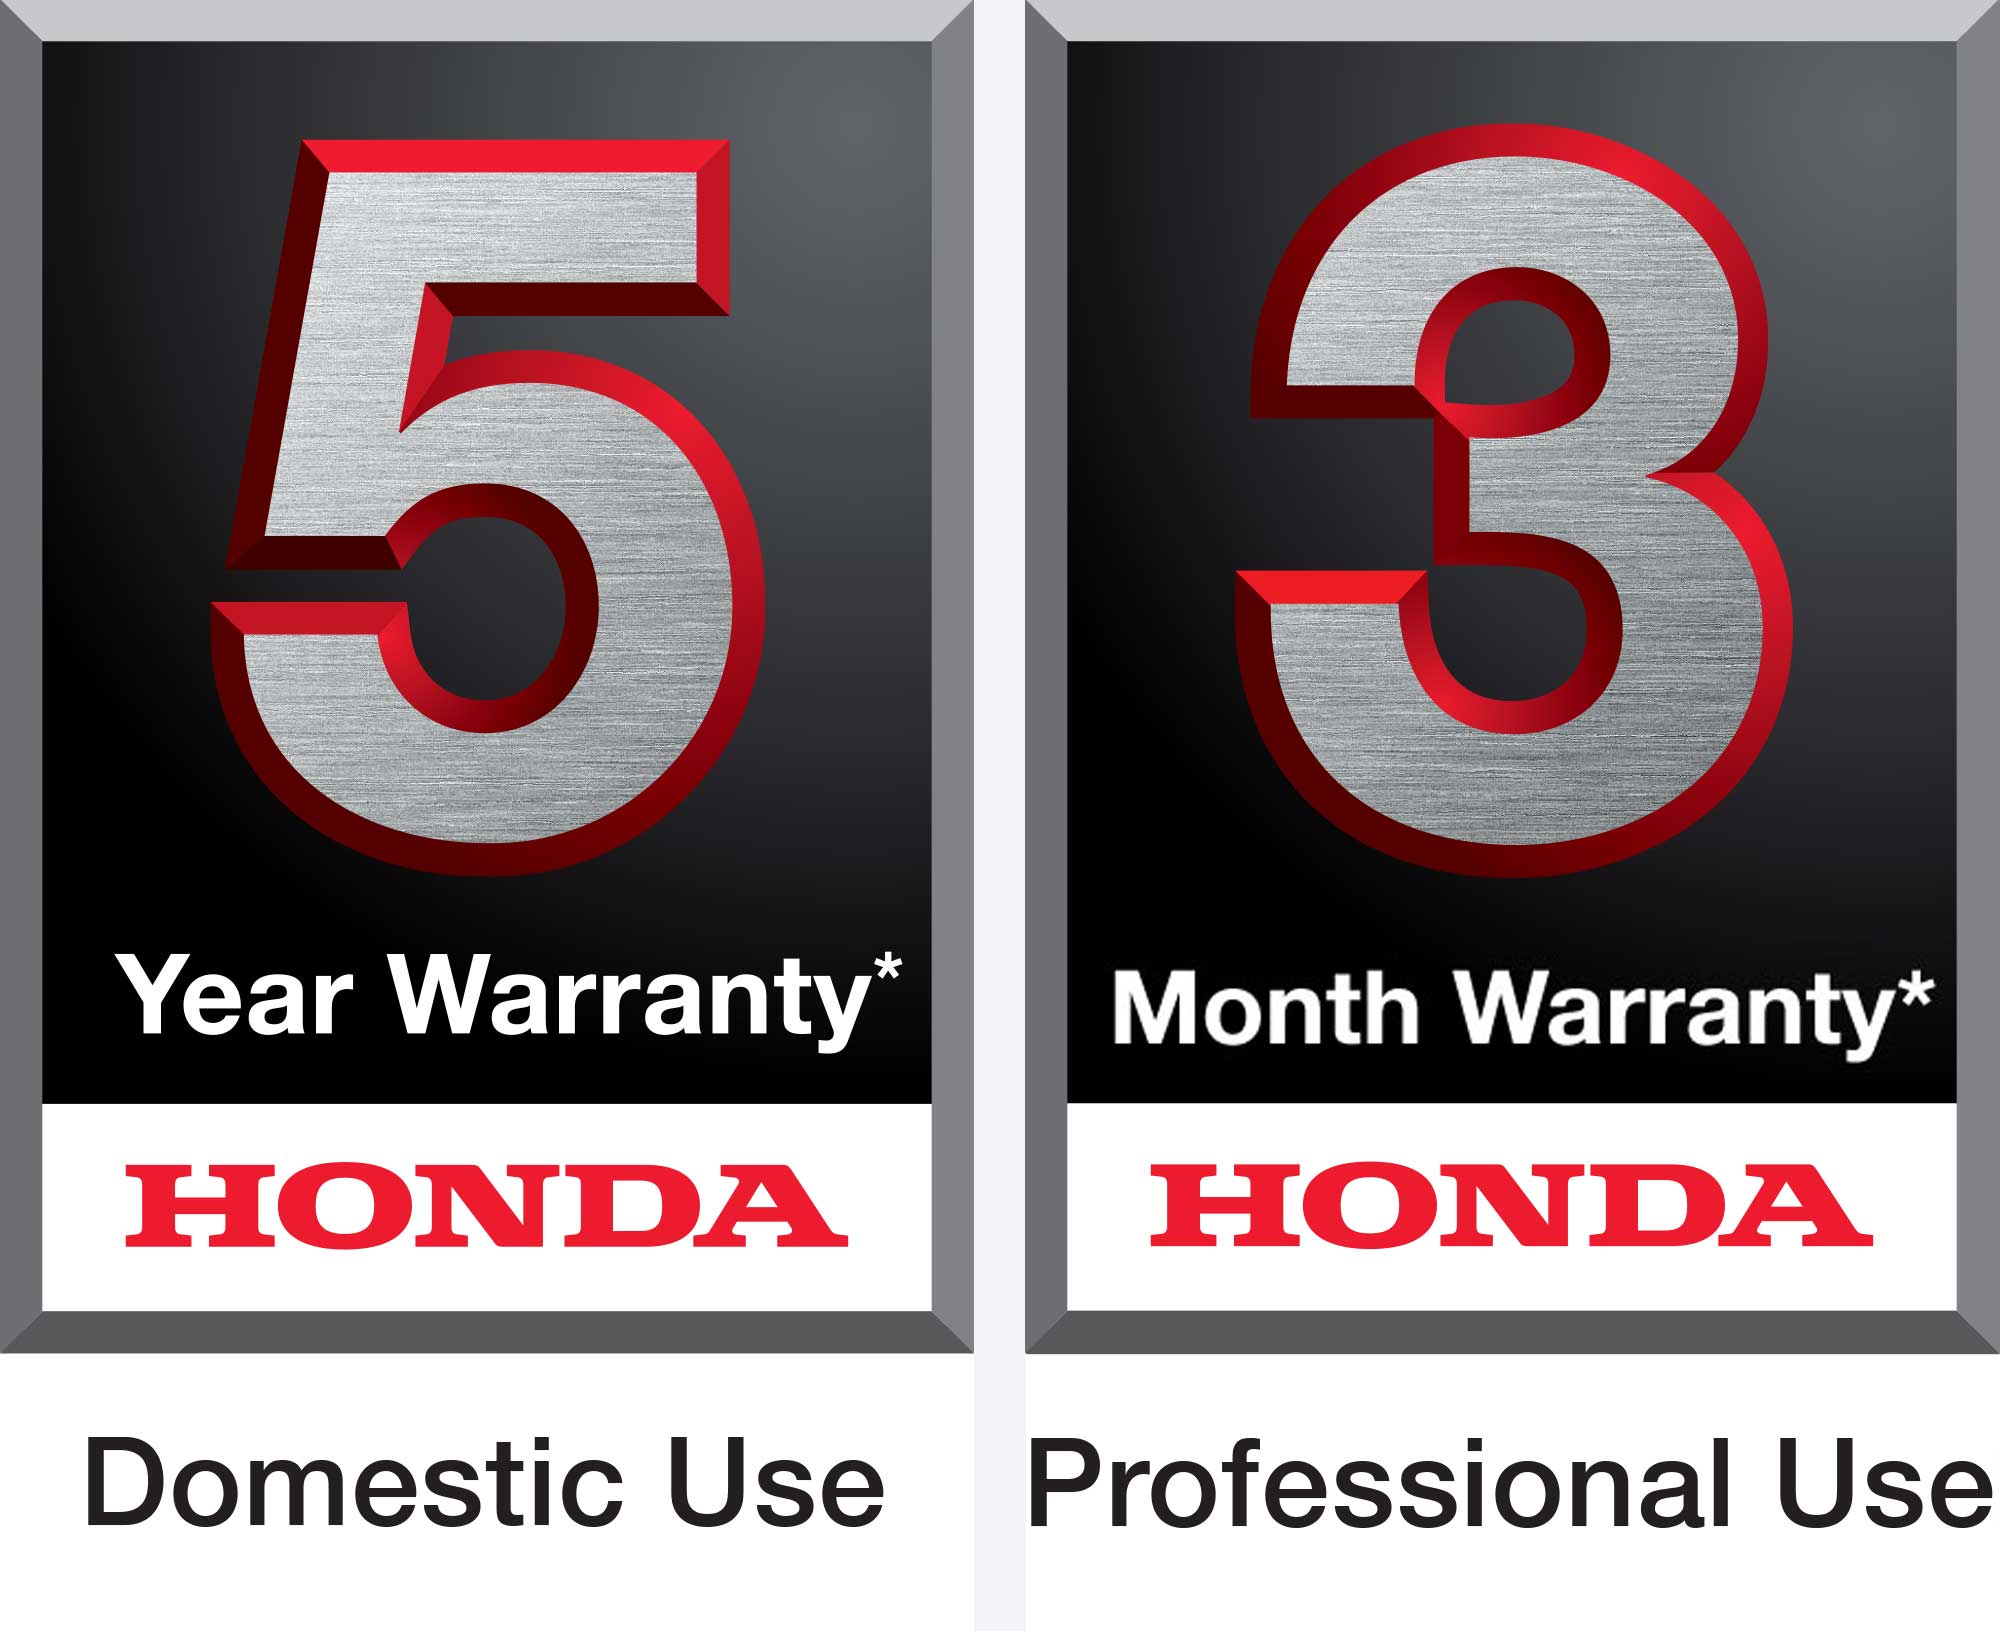 5 year warranty. Honda. Domestic Use. 3 month warranty. Honda. Professional use.